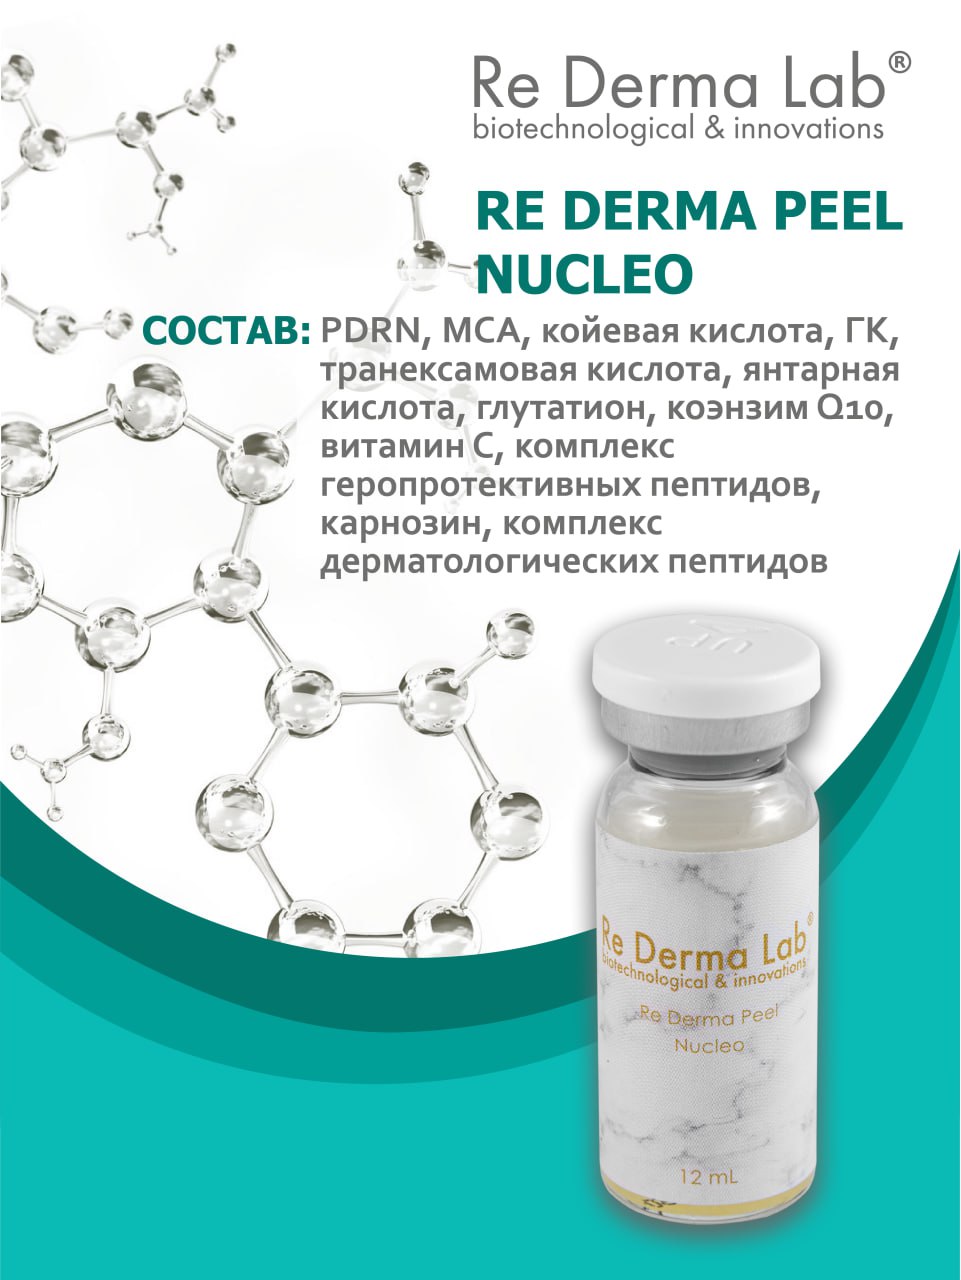 Re Derma Peel Nucleo (Редерма пил нуклео)